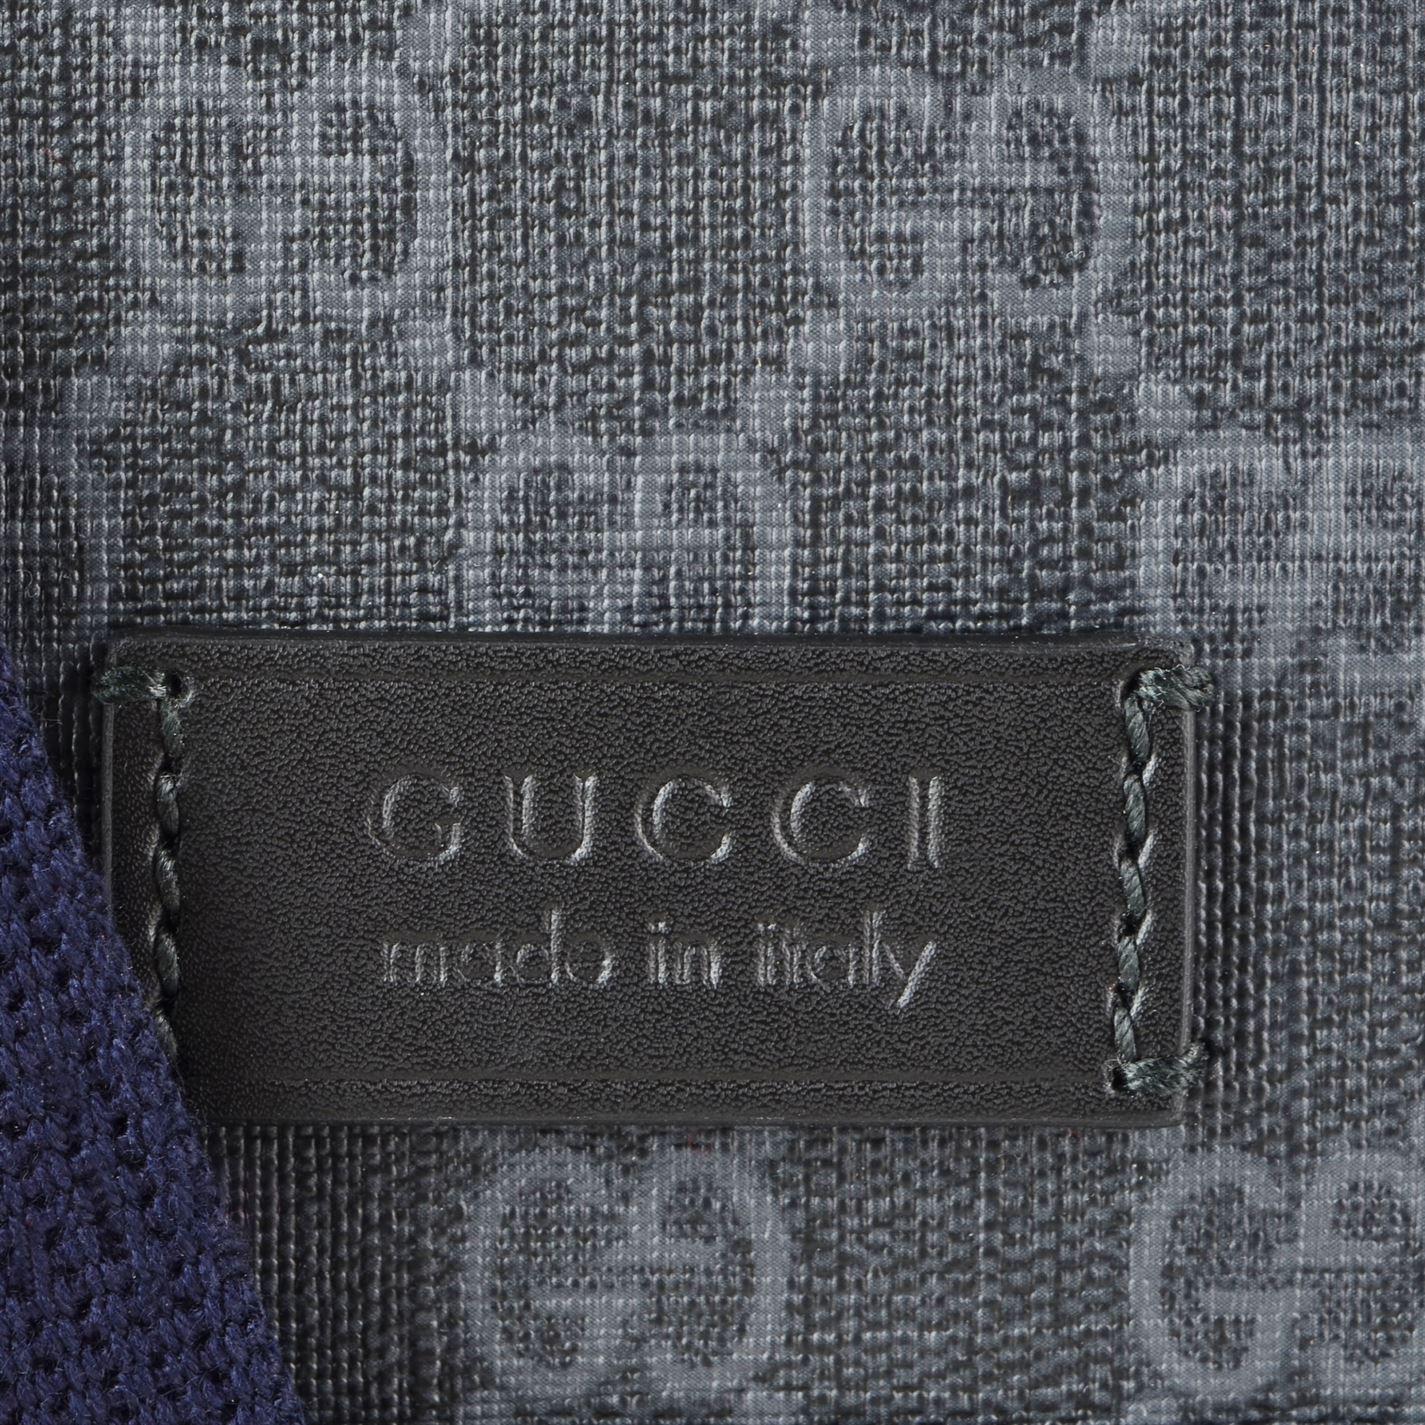 Gucci Canvas Gg Supreme Flap Messenger Bag in Black for Men - Lyst